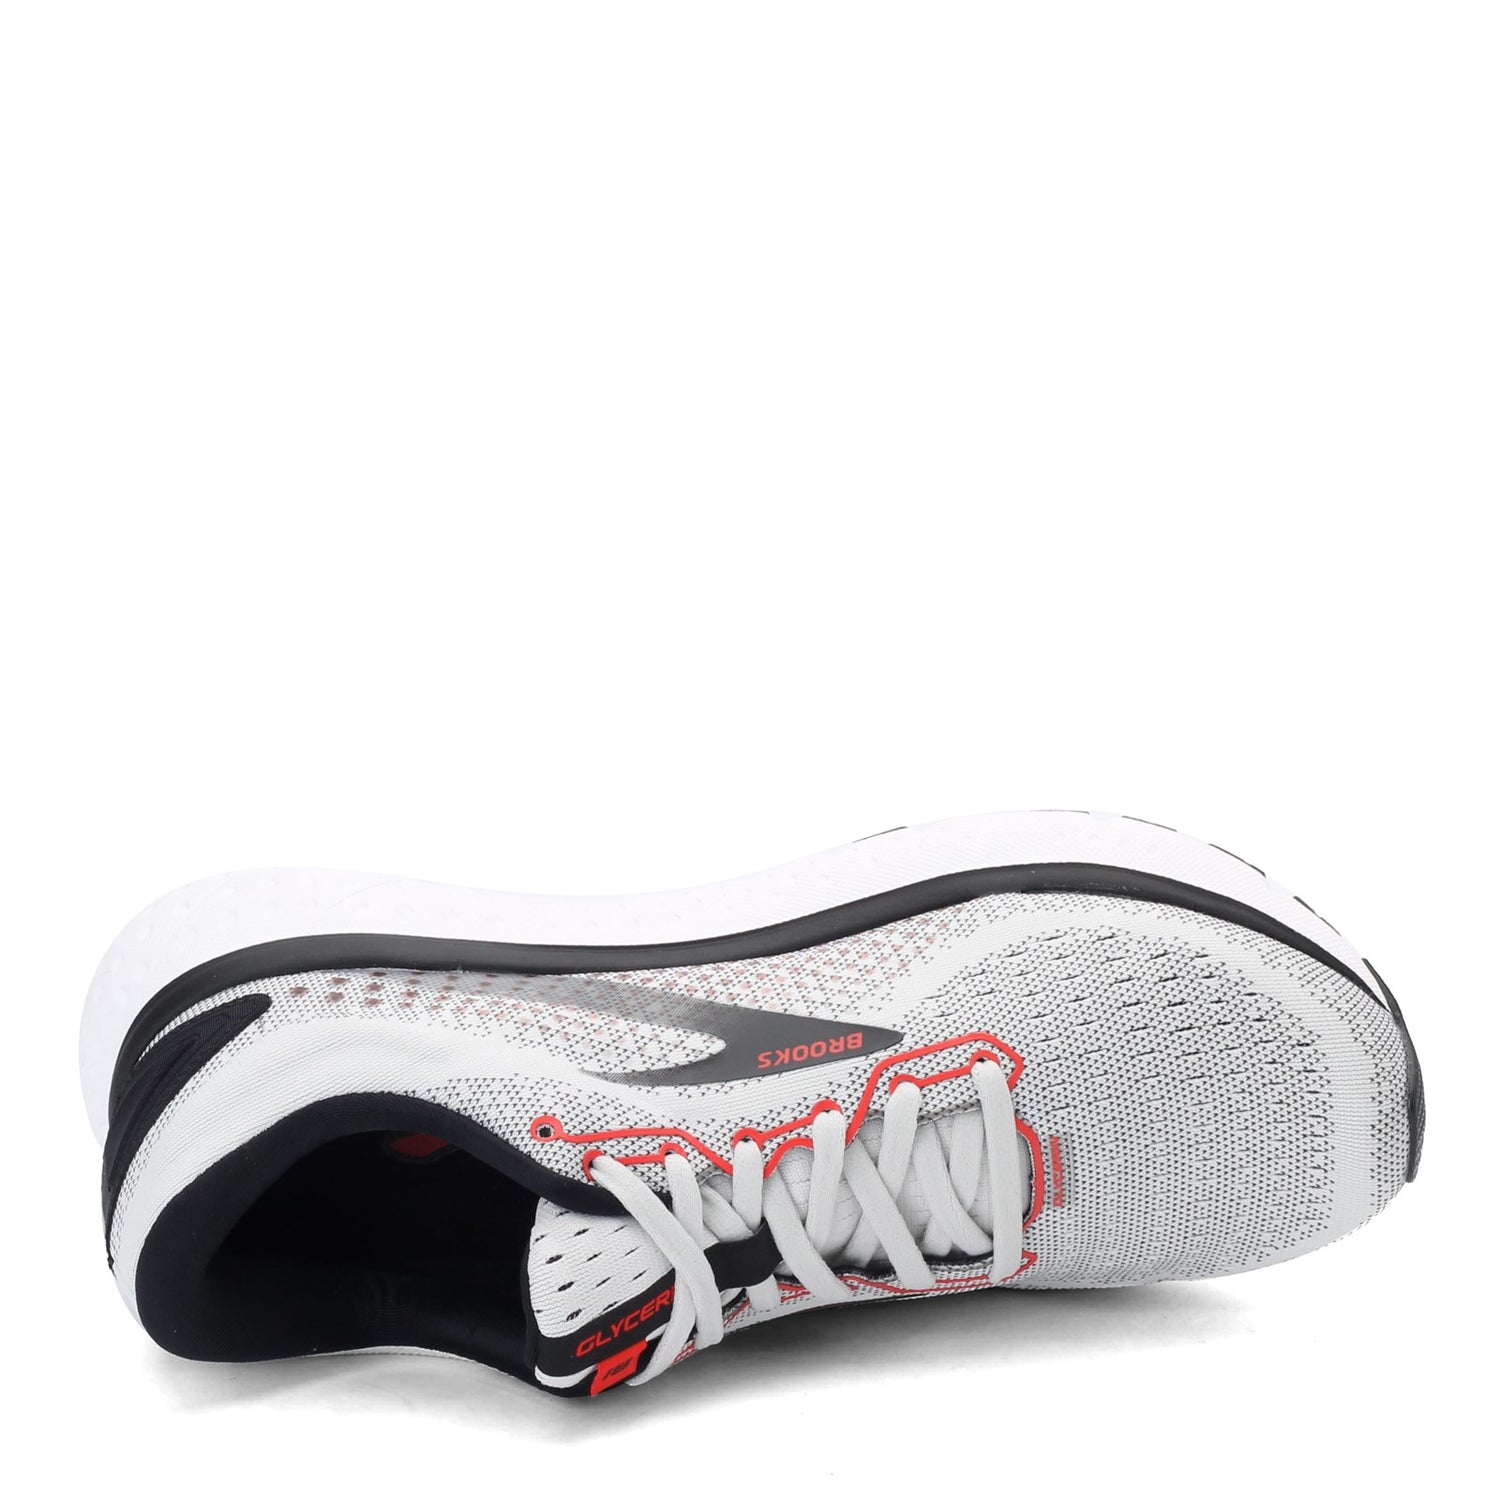 Peltz Shoes  Men's Brooks Glycerin 18 Running Shoe Grey/Black/Red 110329 1D 094